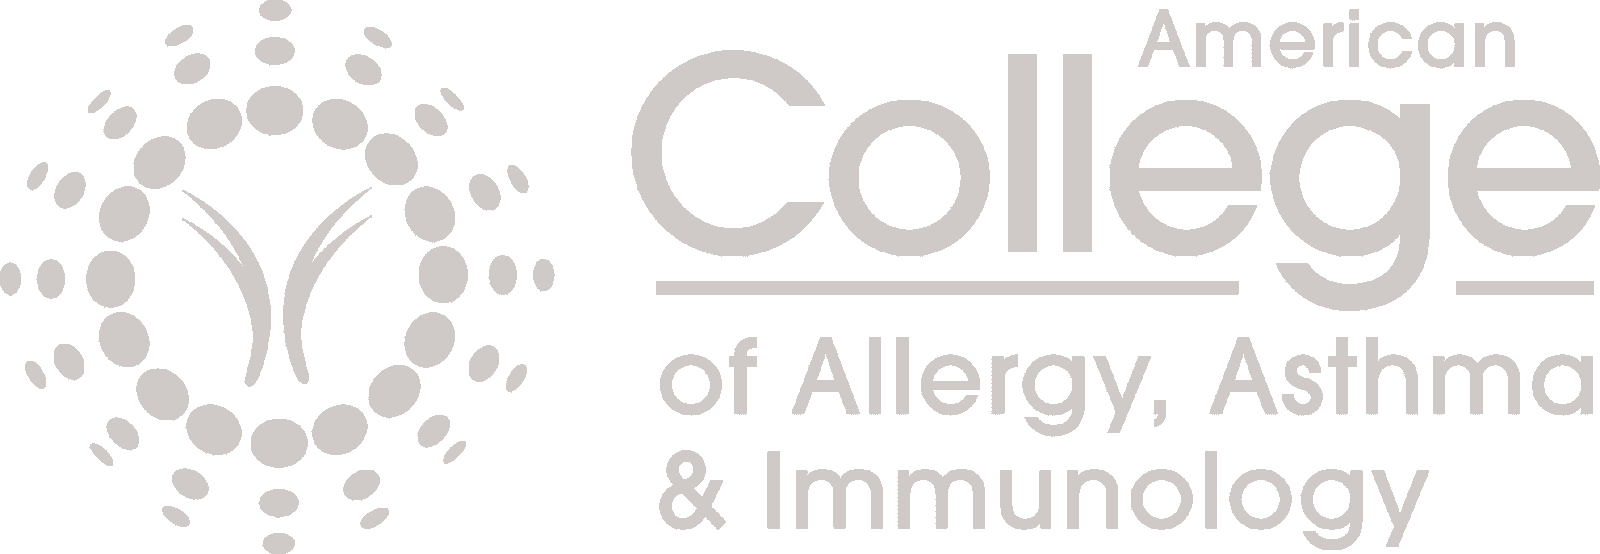 american college of allergy, esthma & immunology logo